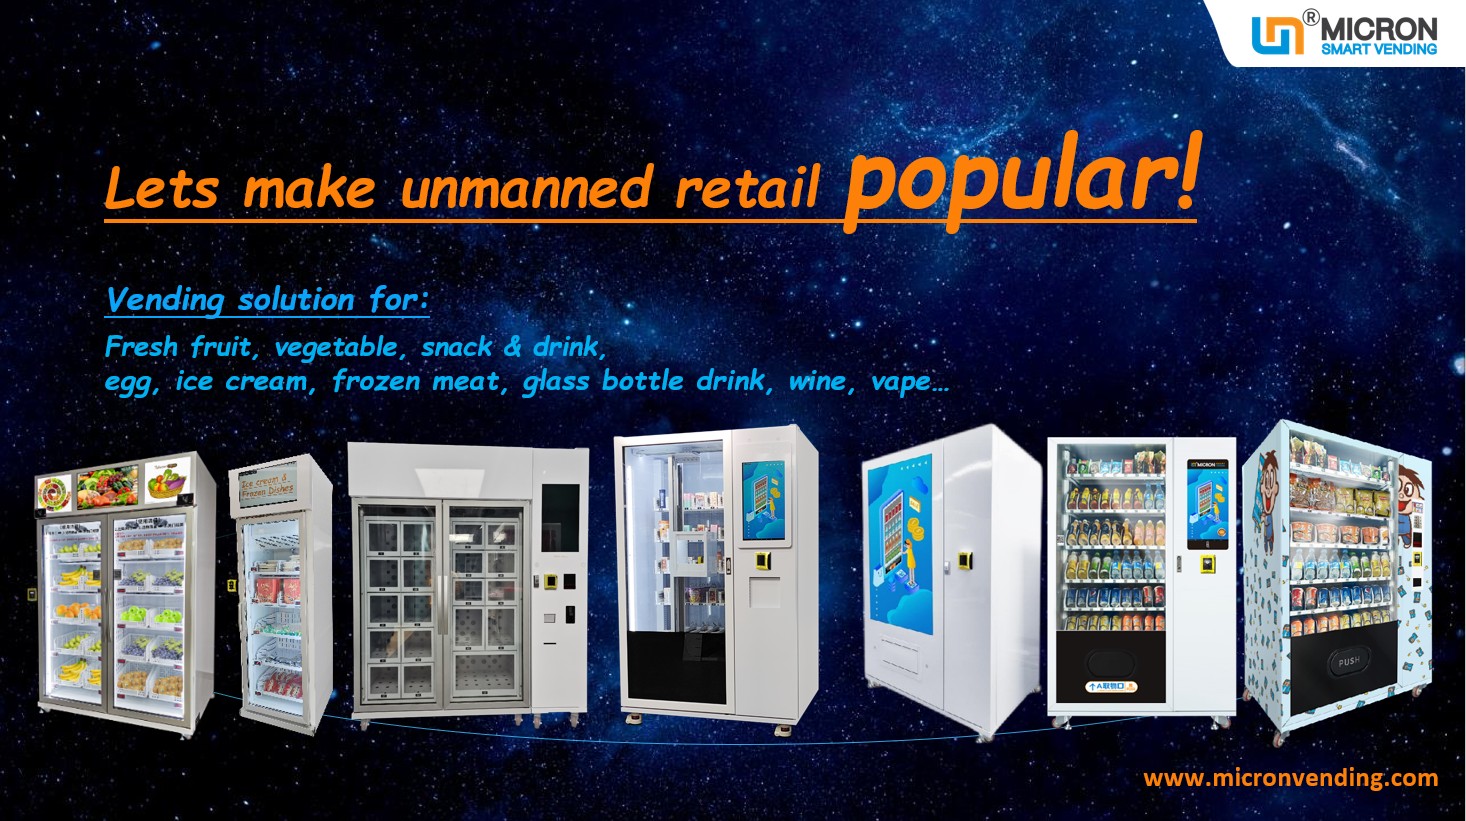 Micron smart vending business